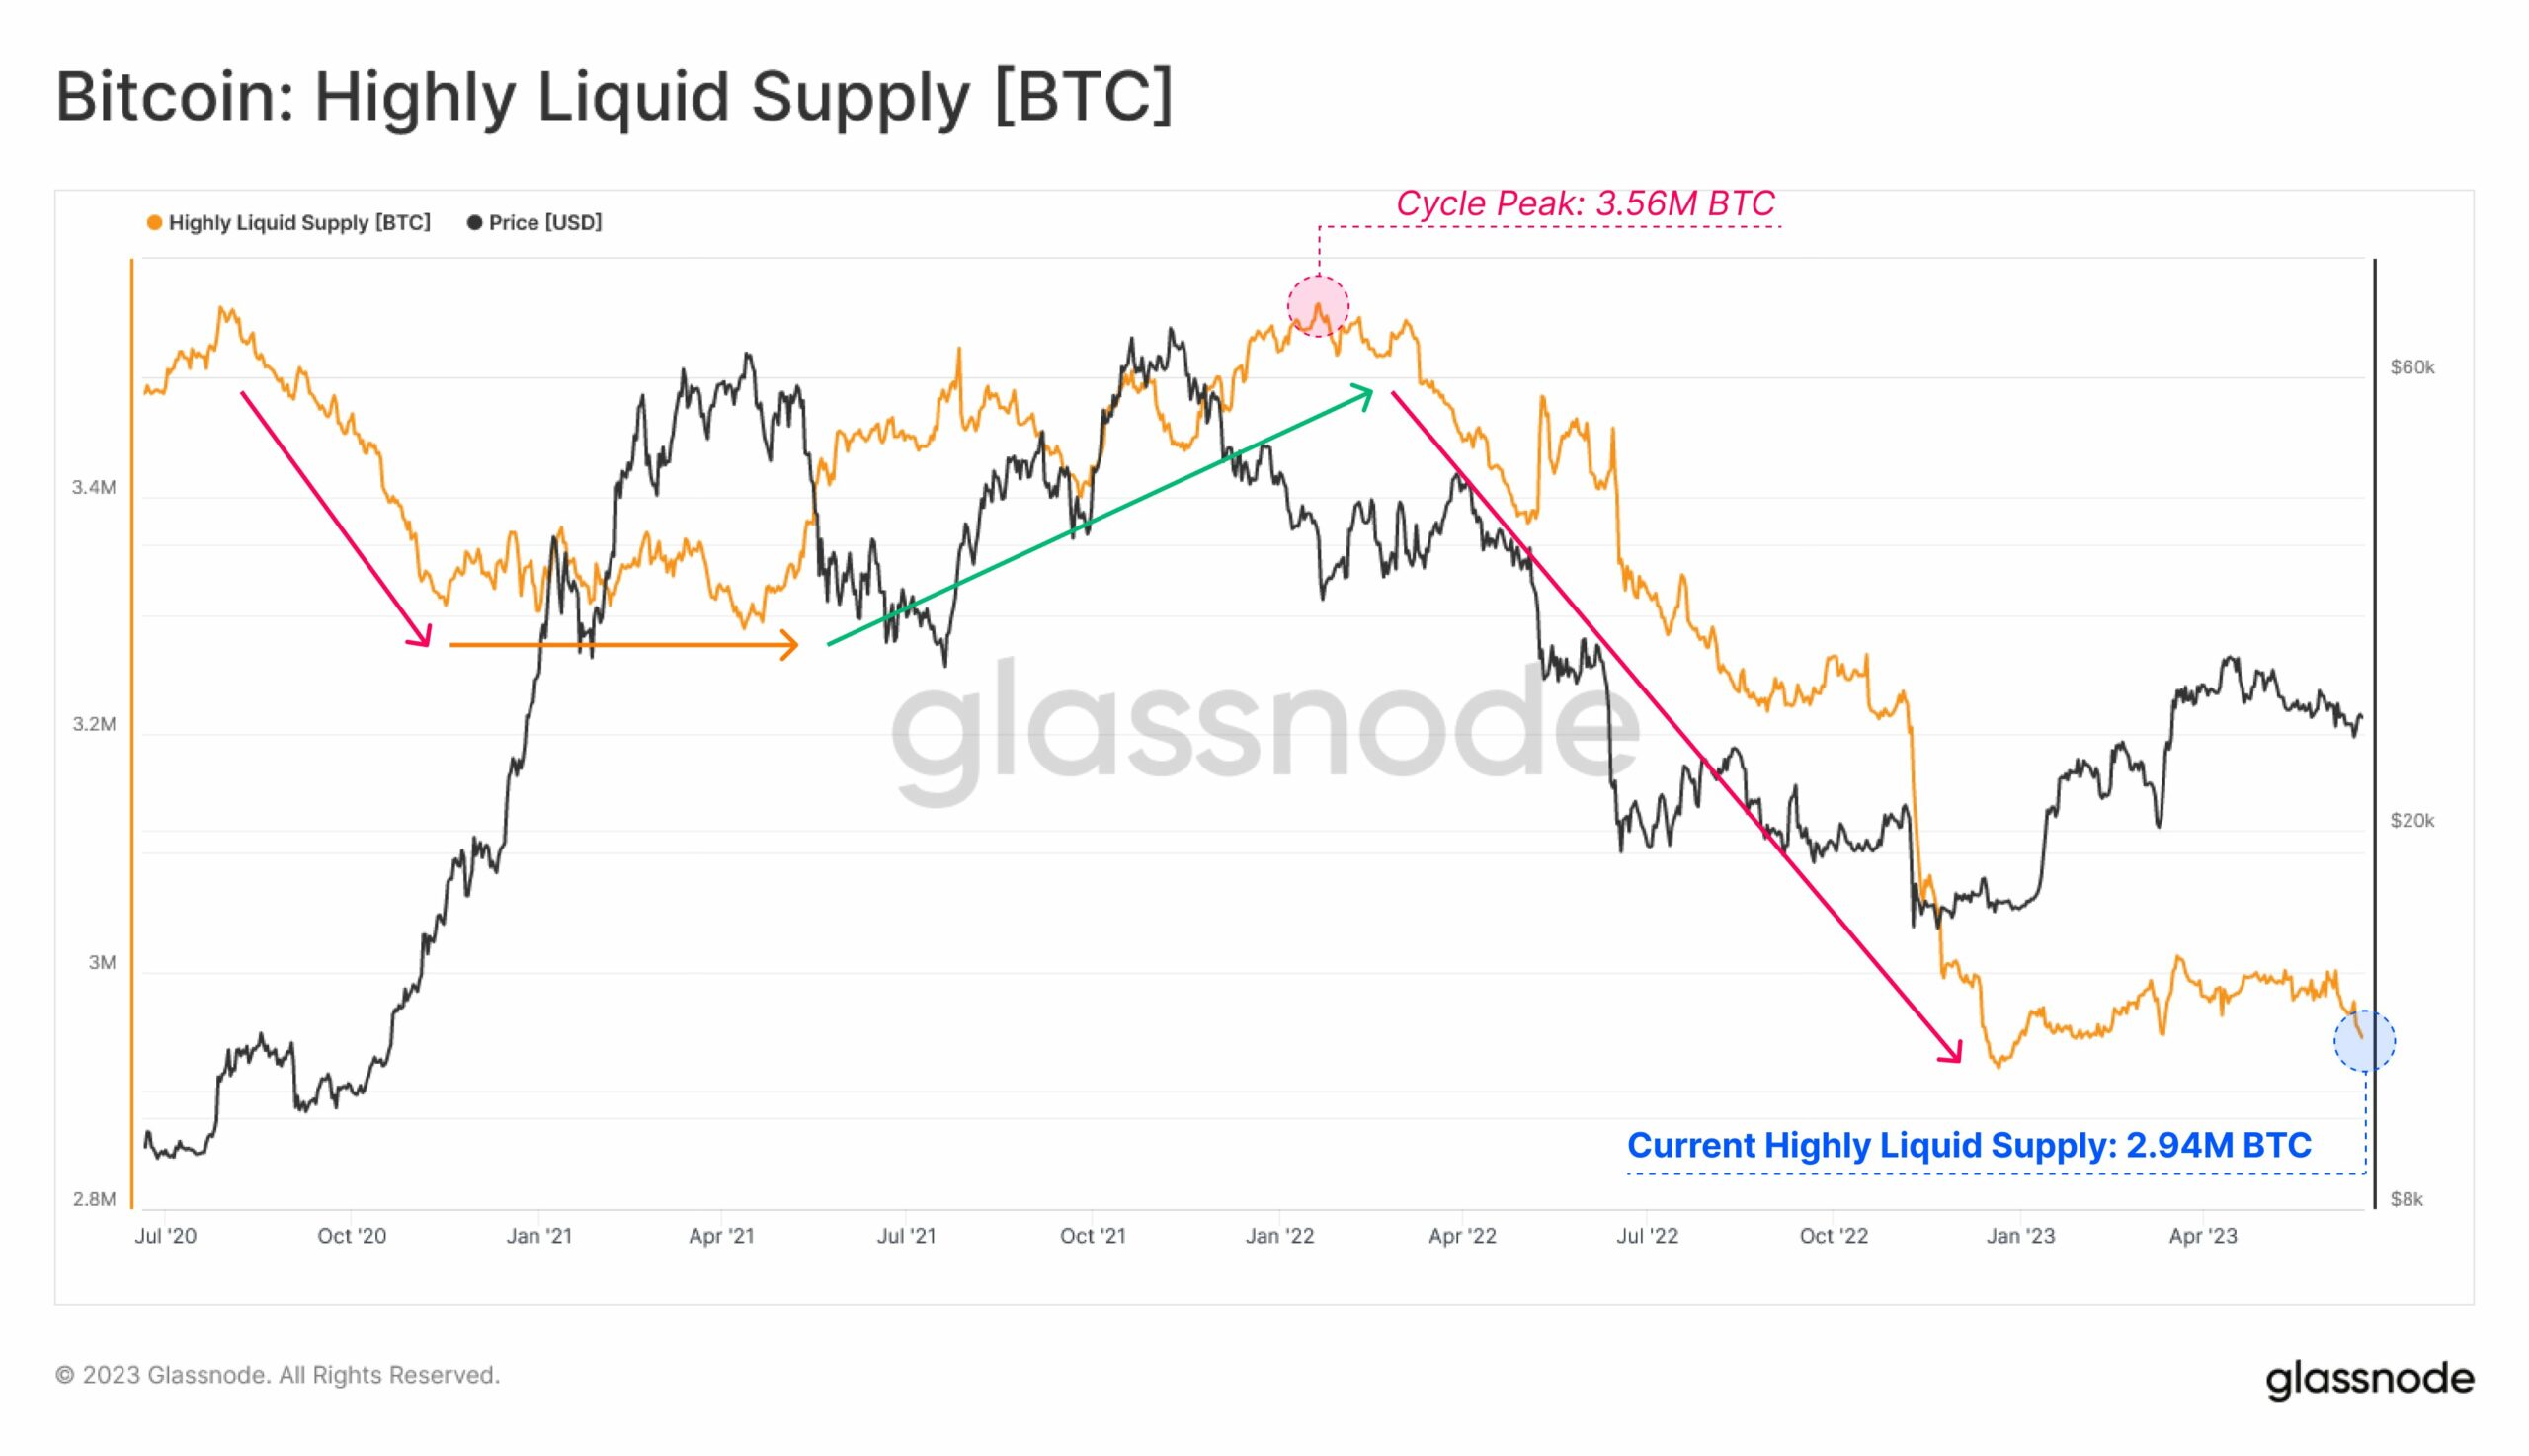 Bitcoin highly liquid supply